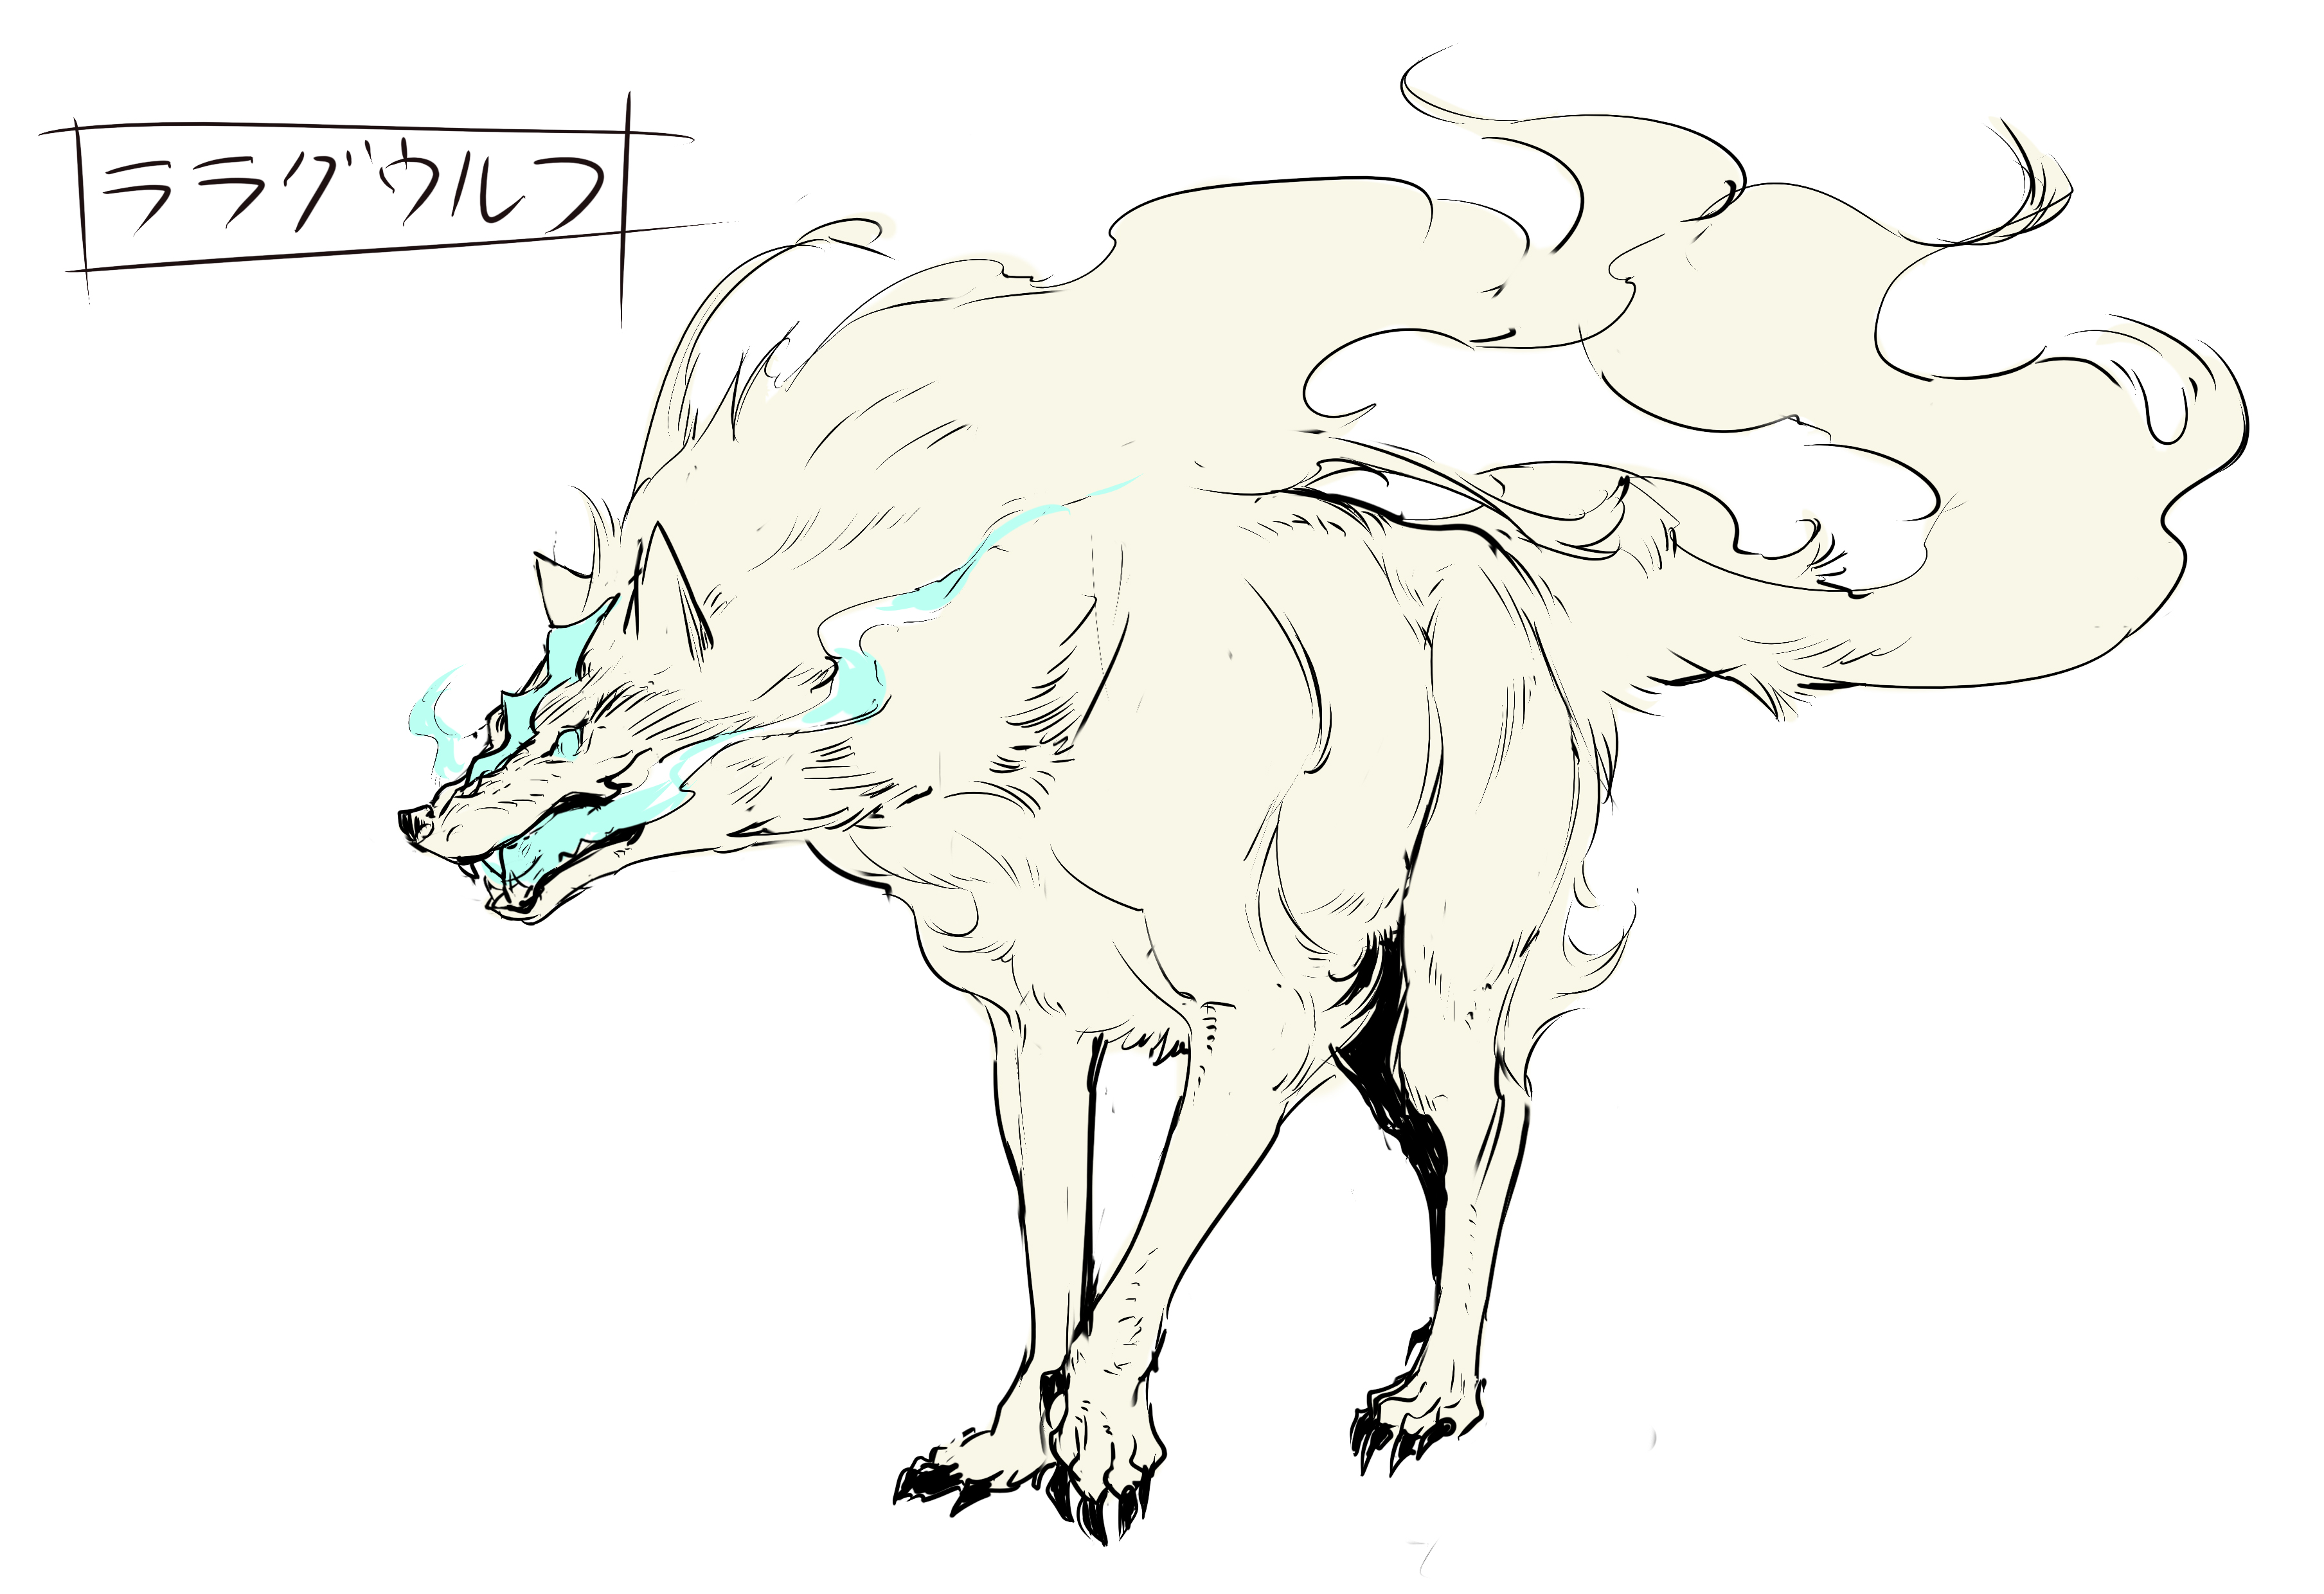 wolf character sheet lineart